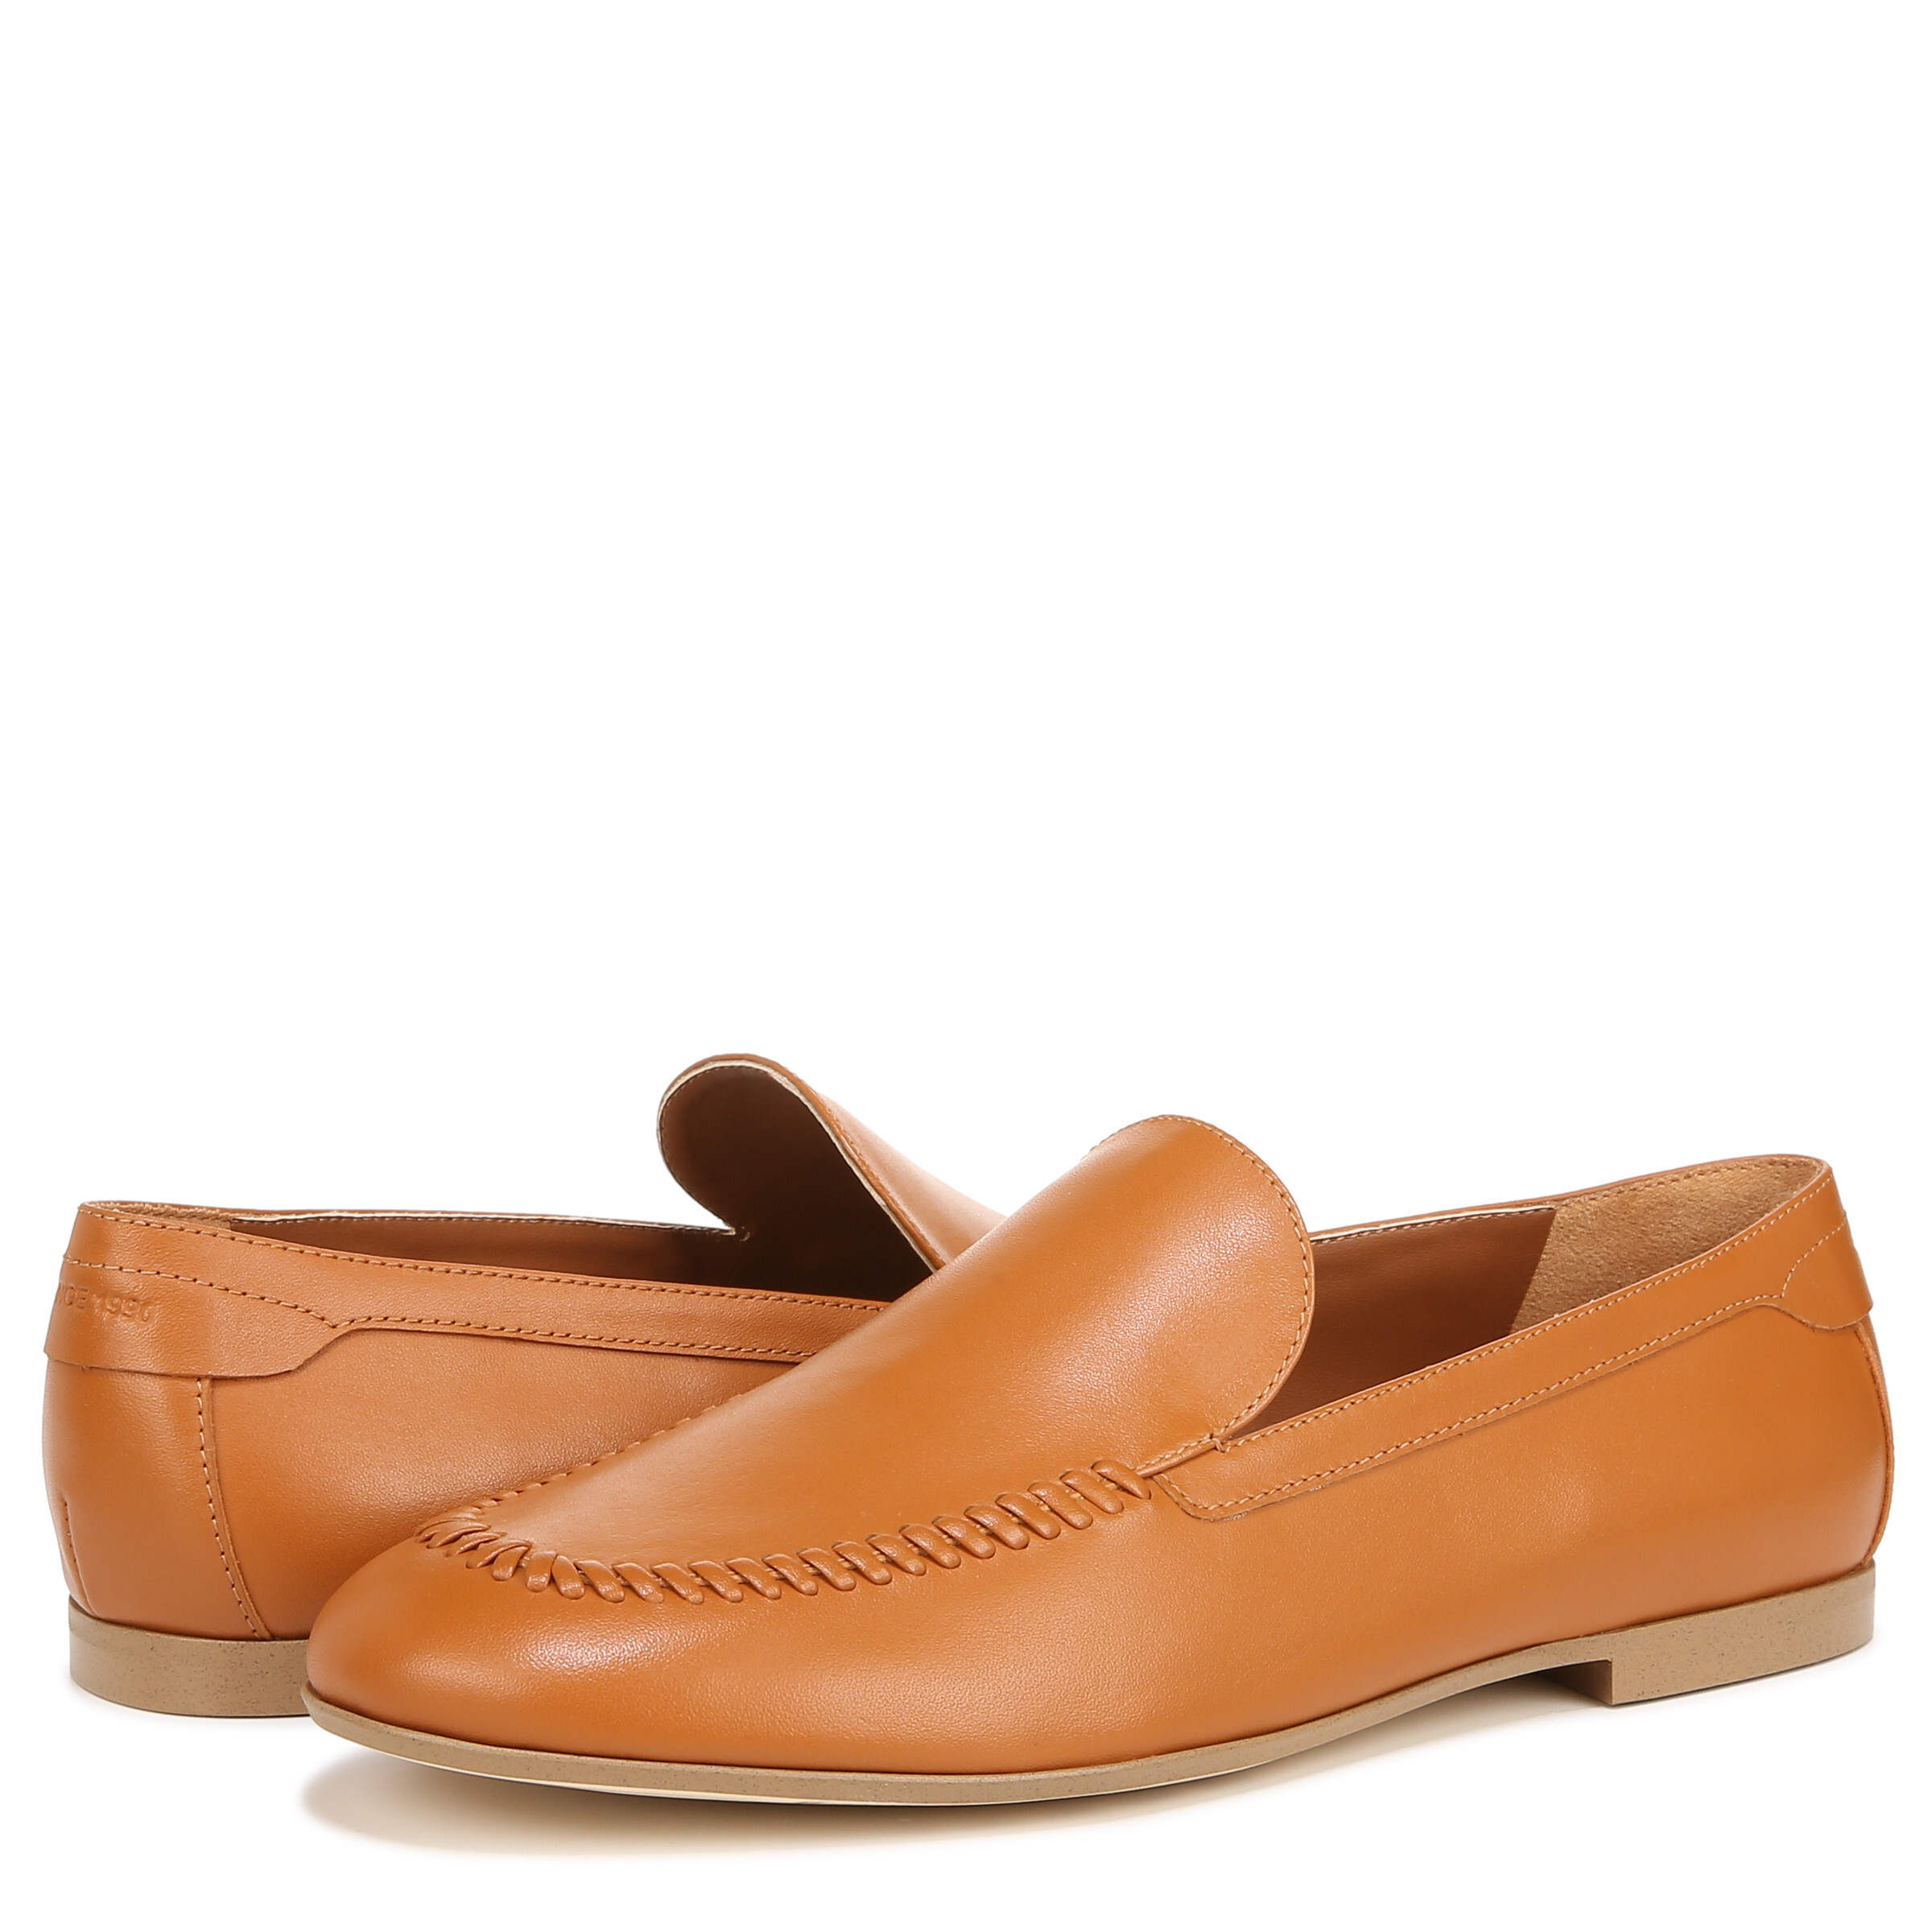 Incaltaminte Femei Franco Sarto Flexa Gala Slip-On Flat Loafers Tan Brown Leather